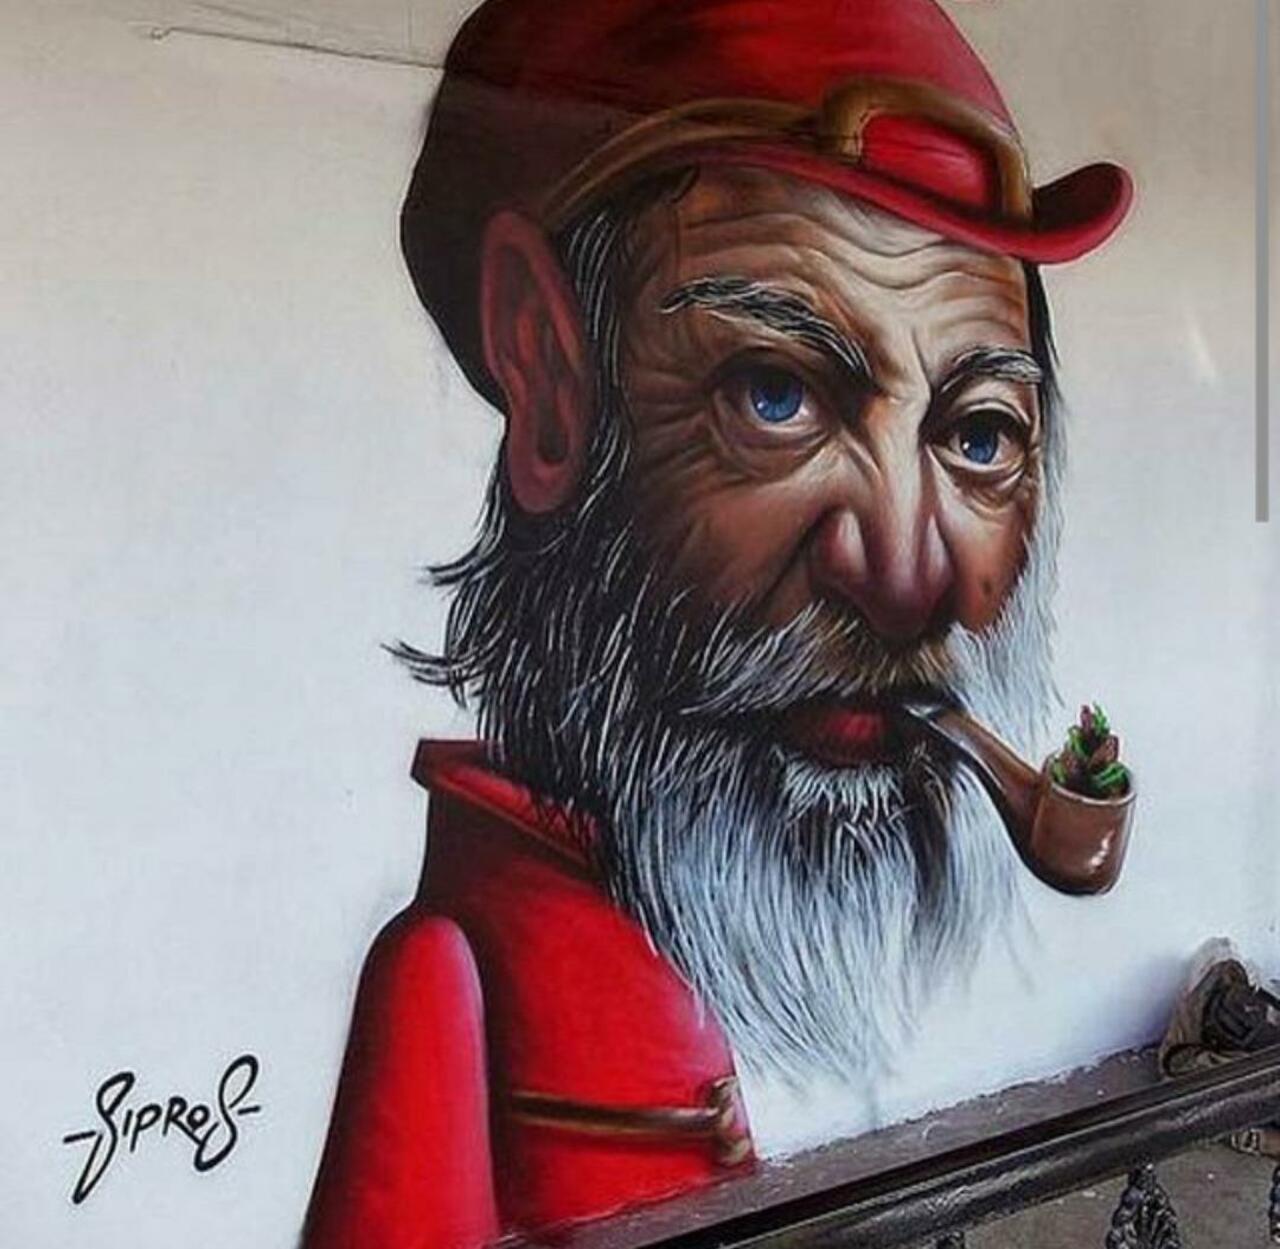 “@hypatia373: #art #streetart #graffiti 
#Sipros http://t.co/EcbATc21os”